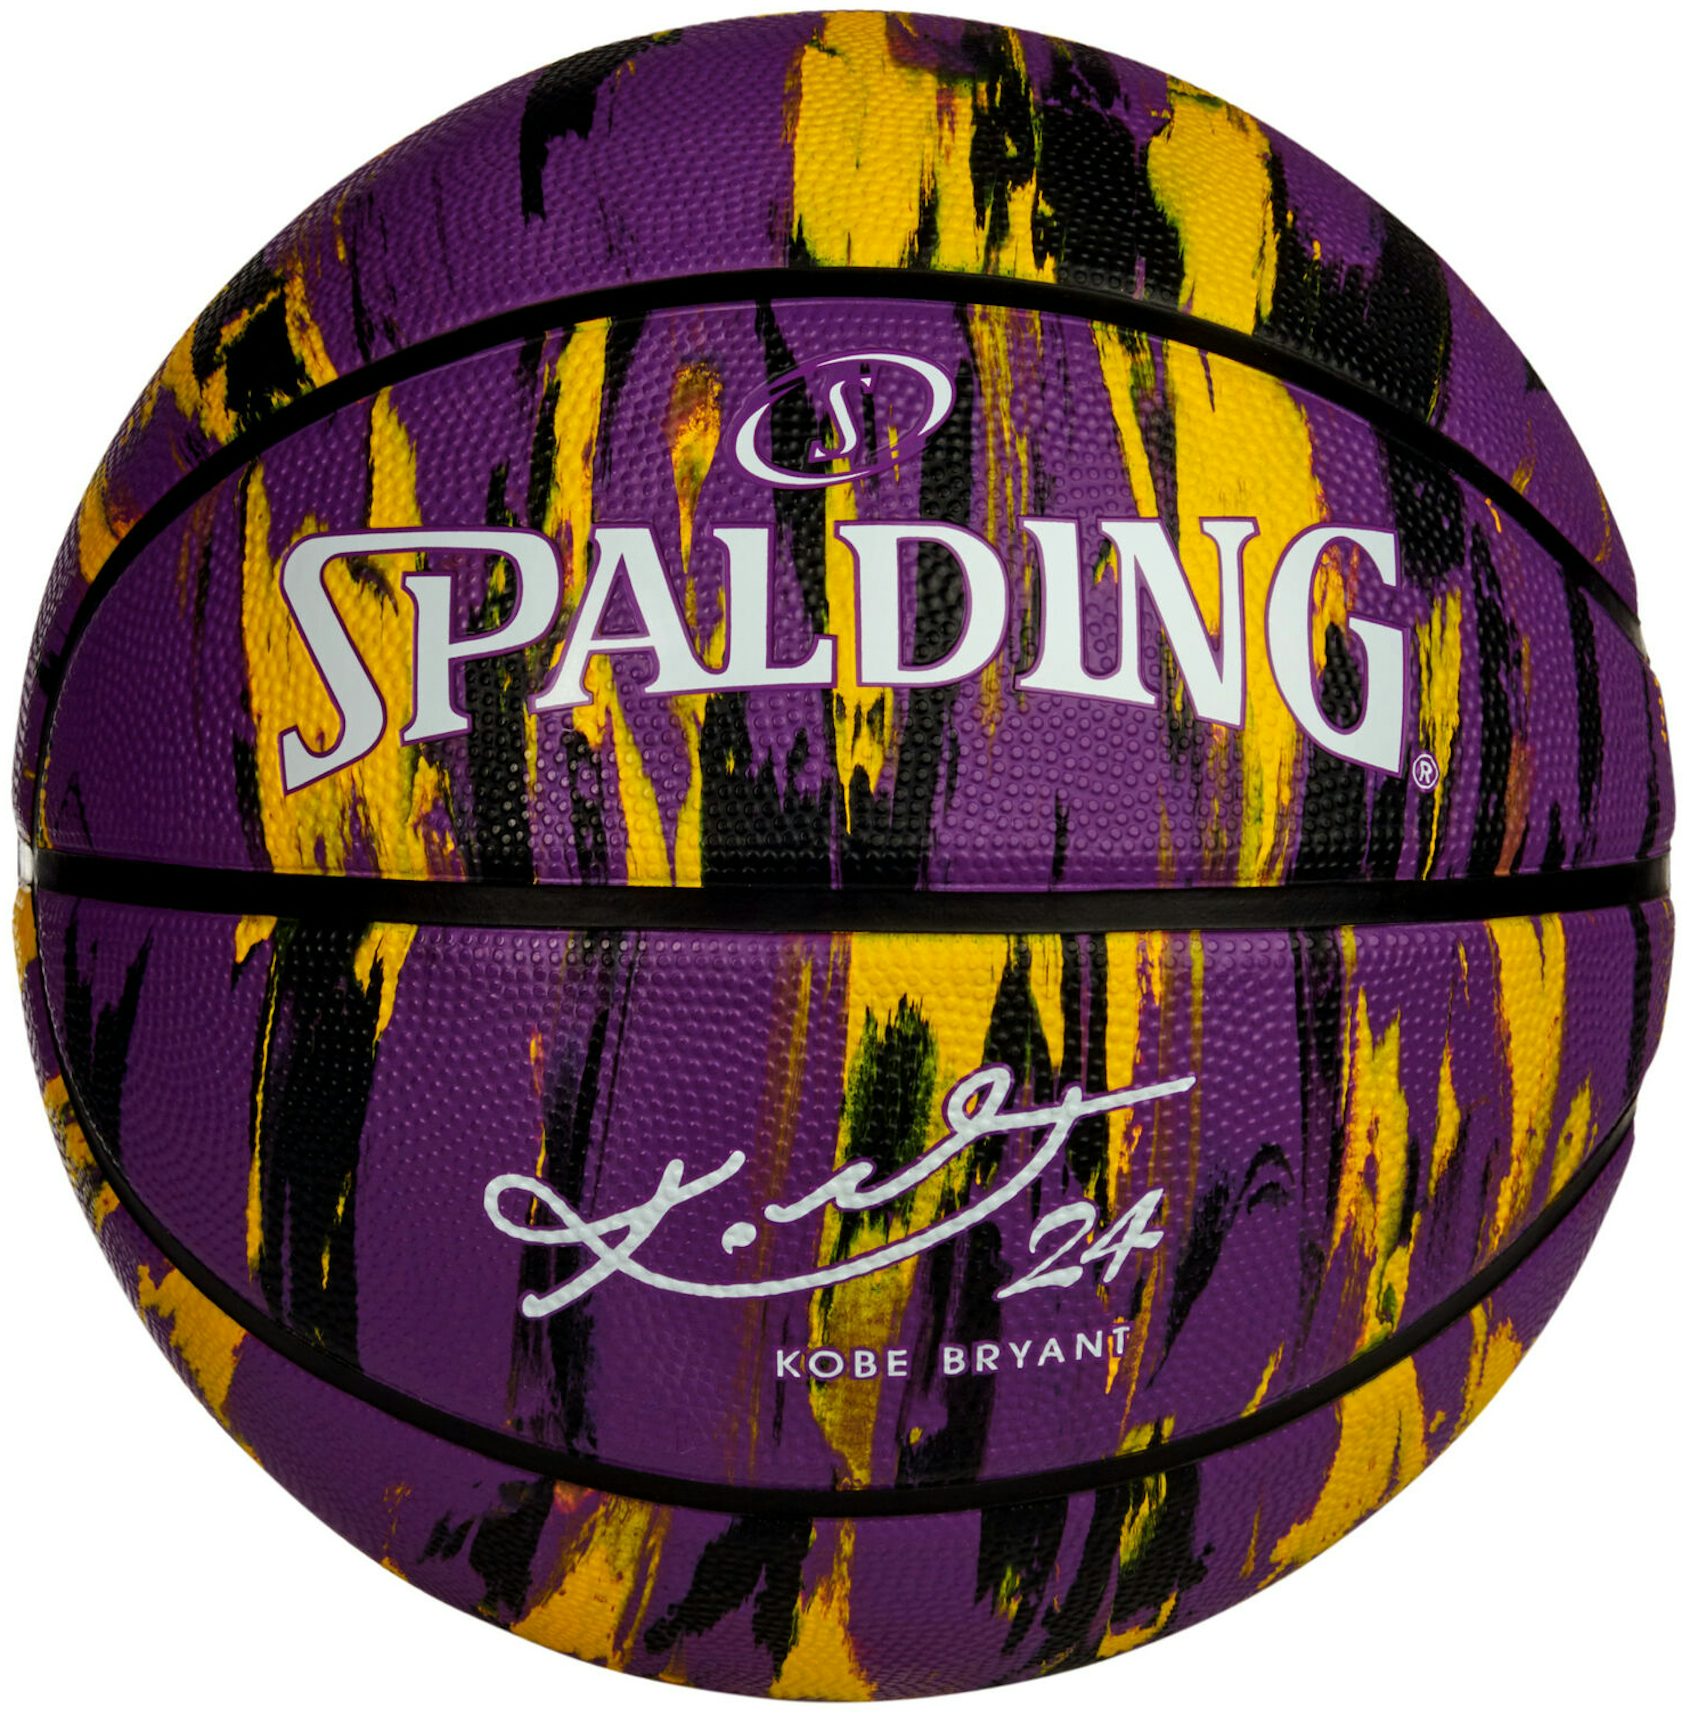 US x Marble Bryant Spalding Basketball Series Kobe Purple/Yellow -